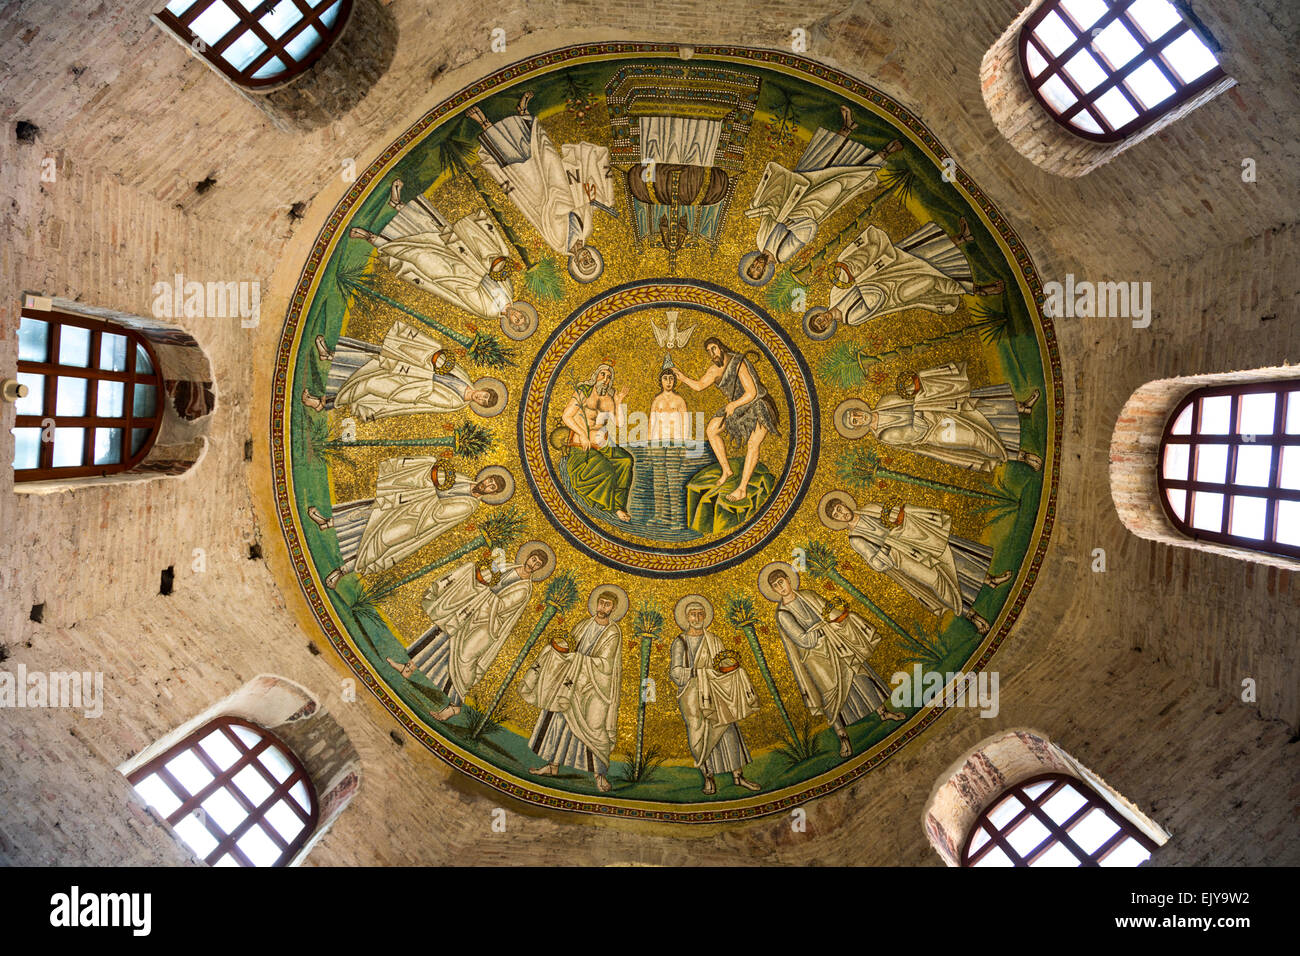 mosaic of the baptism of Jesus by Saint John the Baptist, Arian Baptistry, Ravenna, Italy Stock Photo